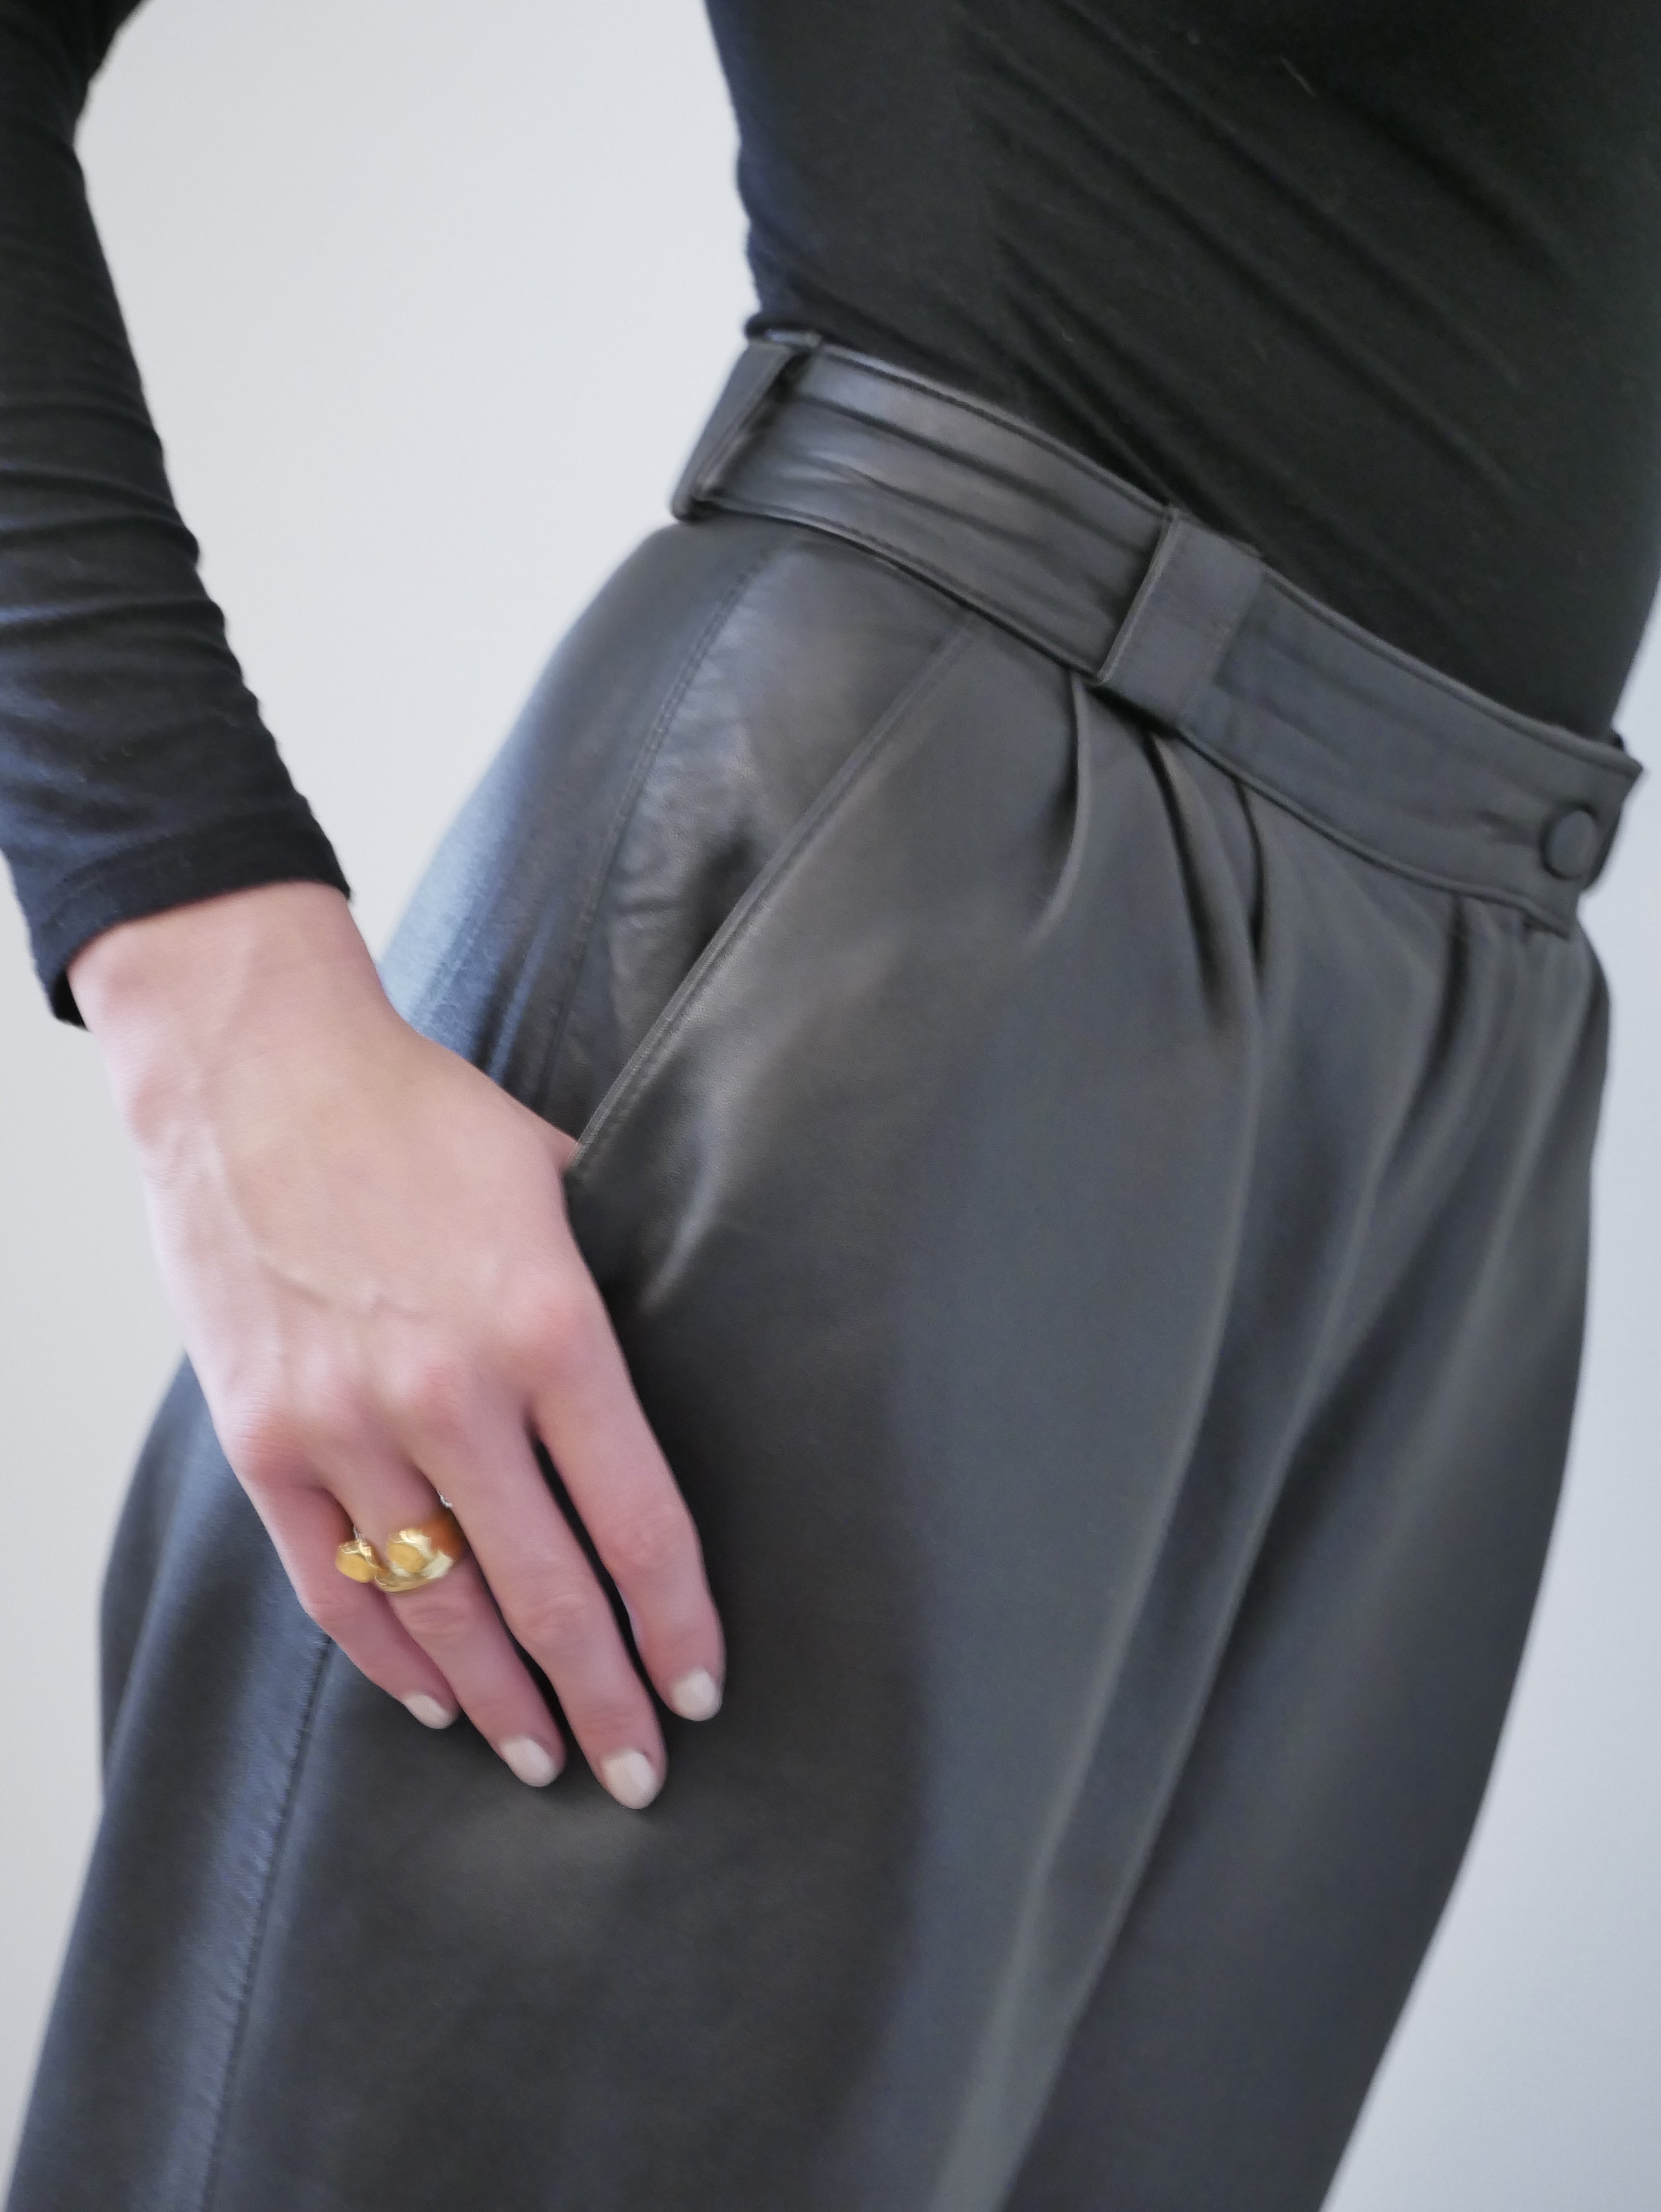 Yves Saint Laurent 1980's leather pleat front trousers